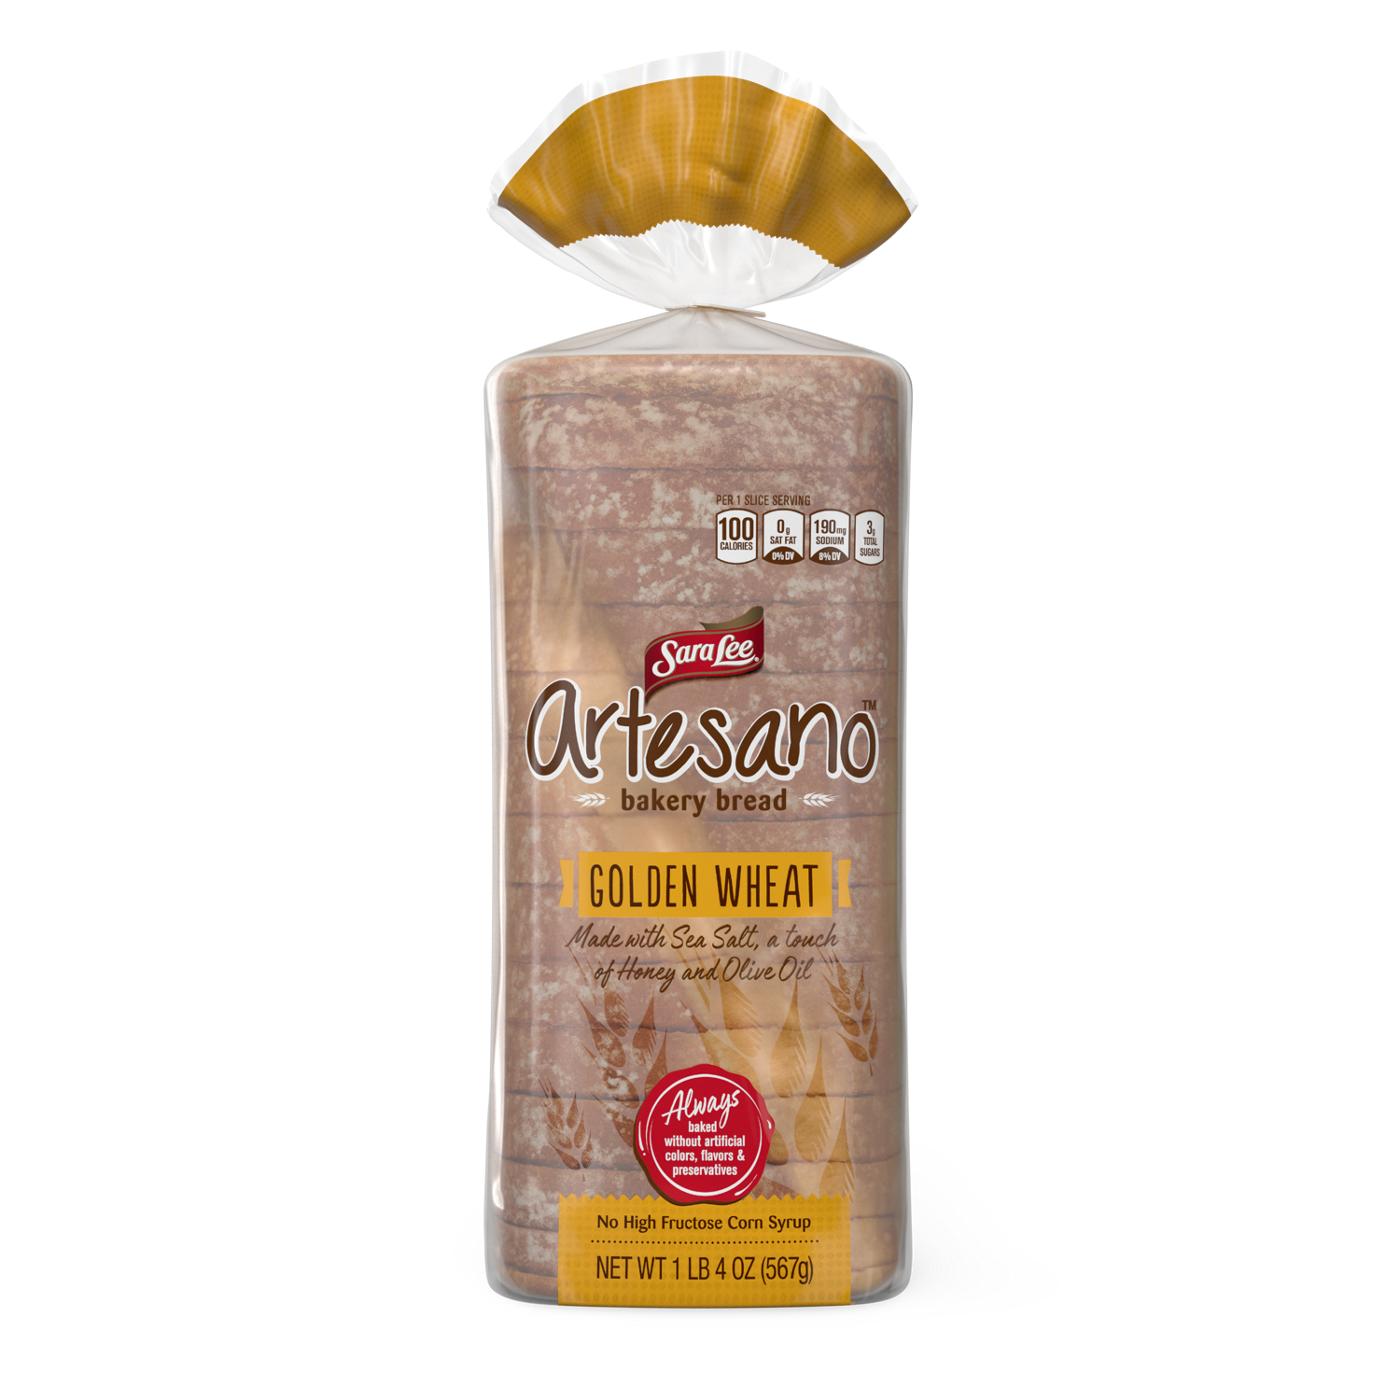 Sara Lee Artesano Golden Wheat Bakery Bread; image 1 of 3